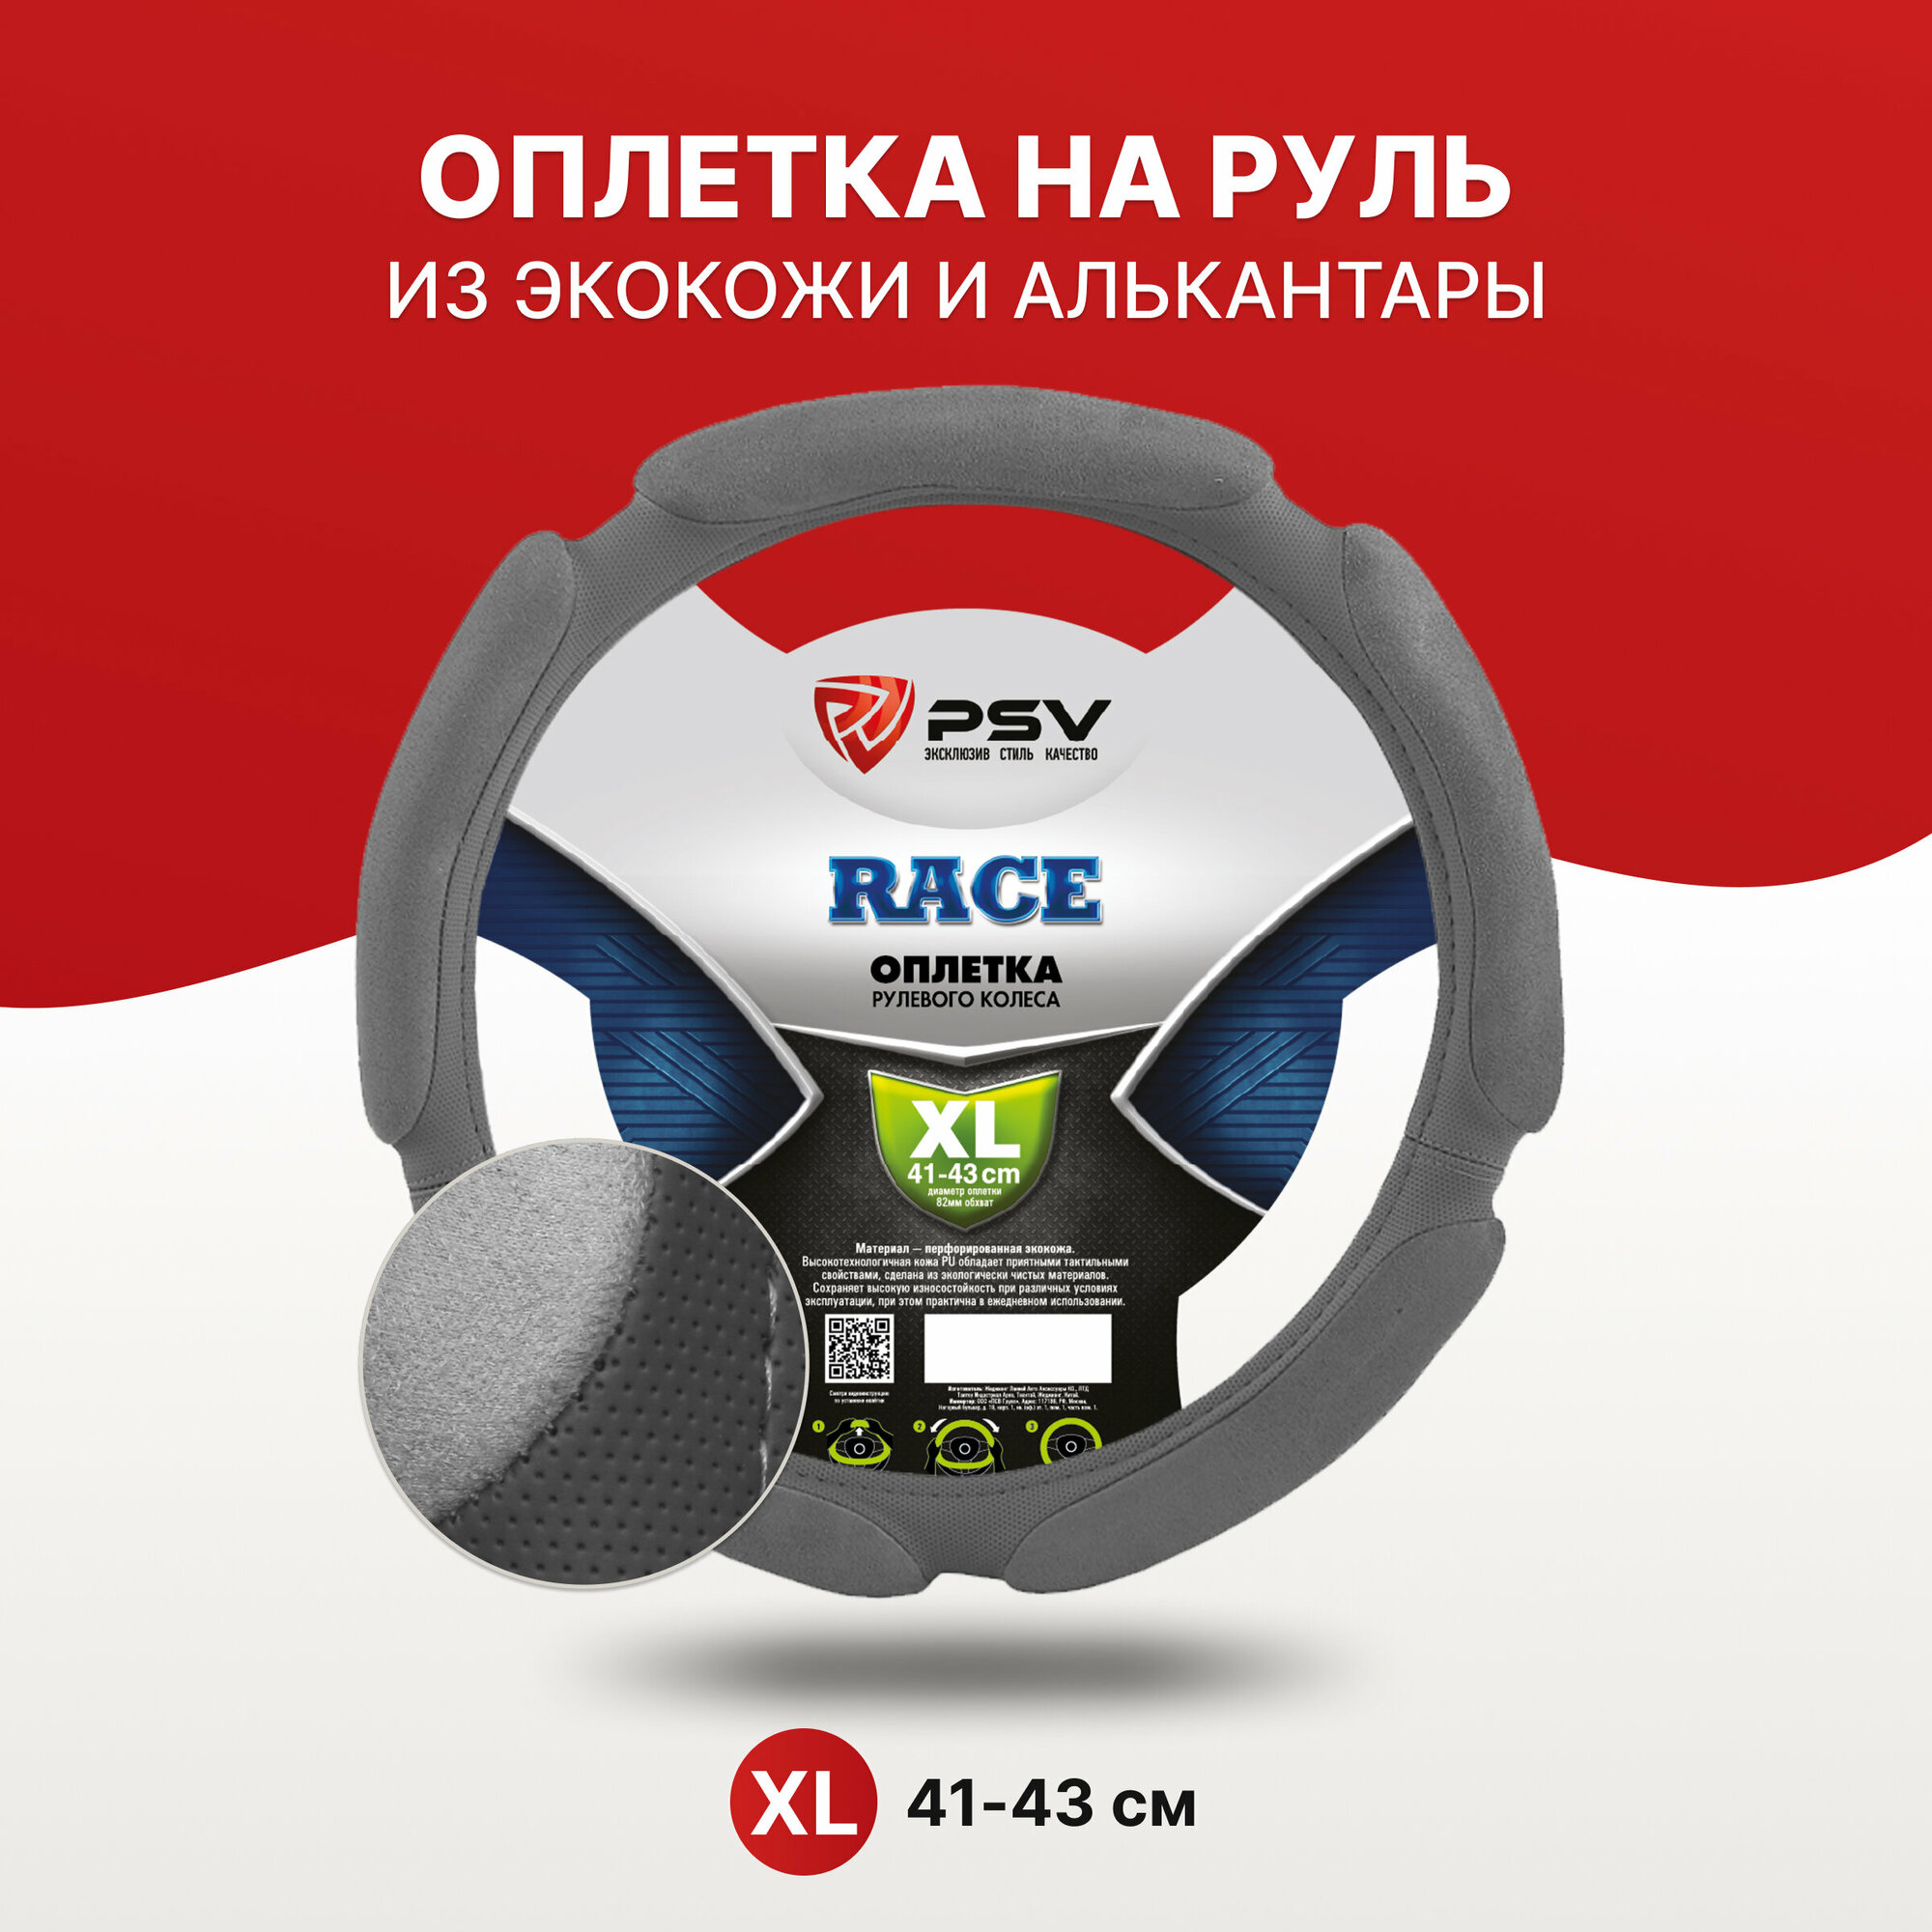 Оплетка чехол на руль PSV RACE (Серый) XL 41-43, экокожа + алькантара, 117099